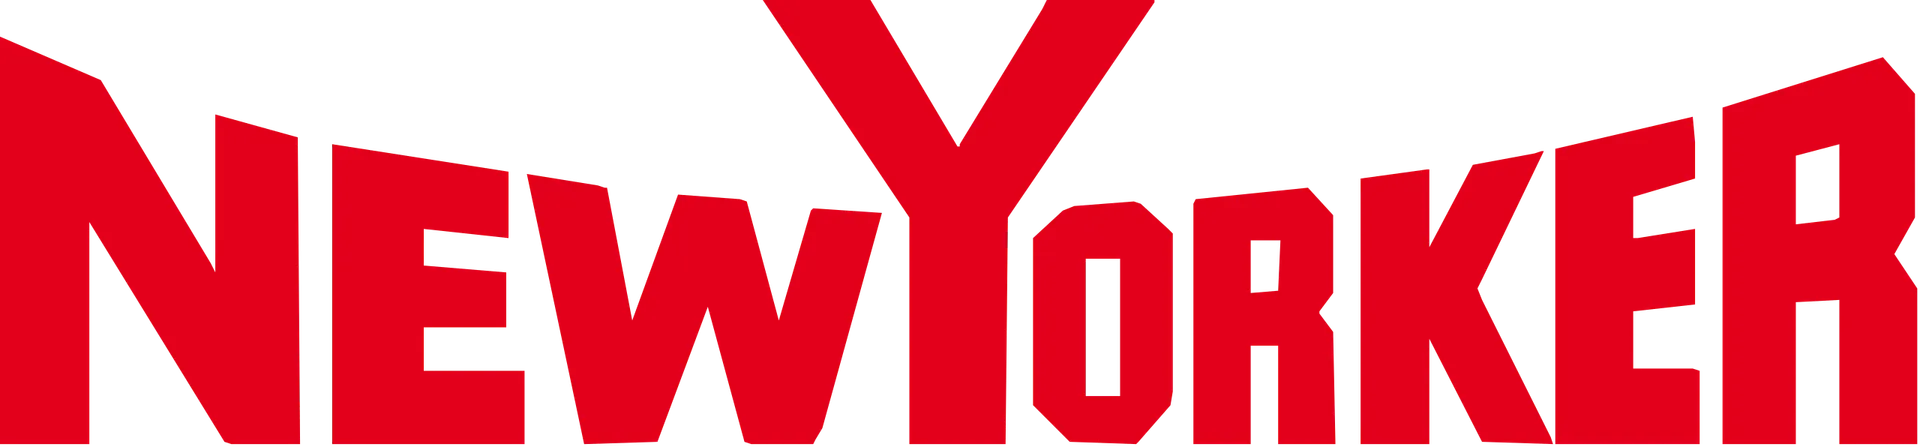 NEW YORKER logo